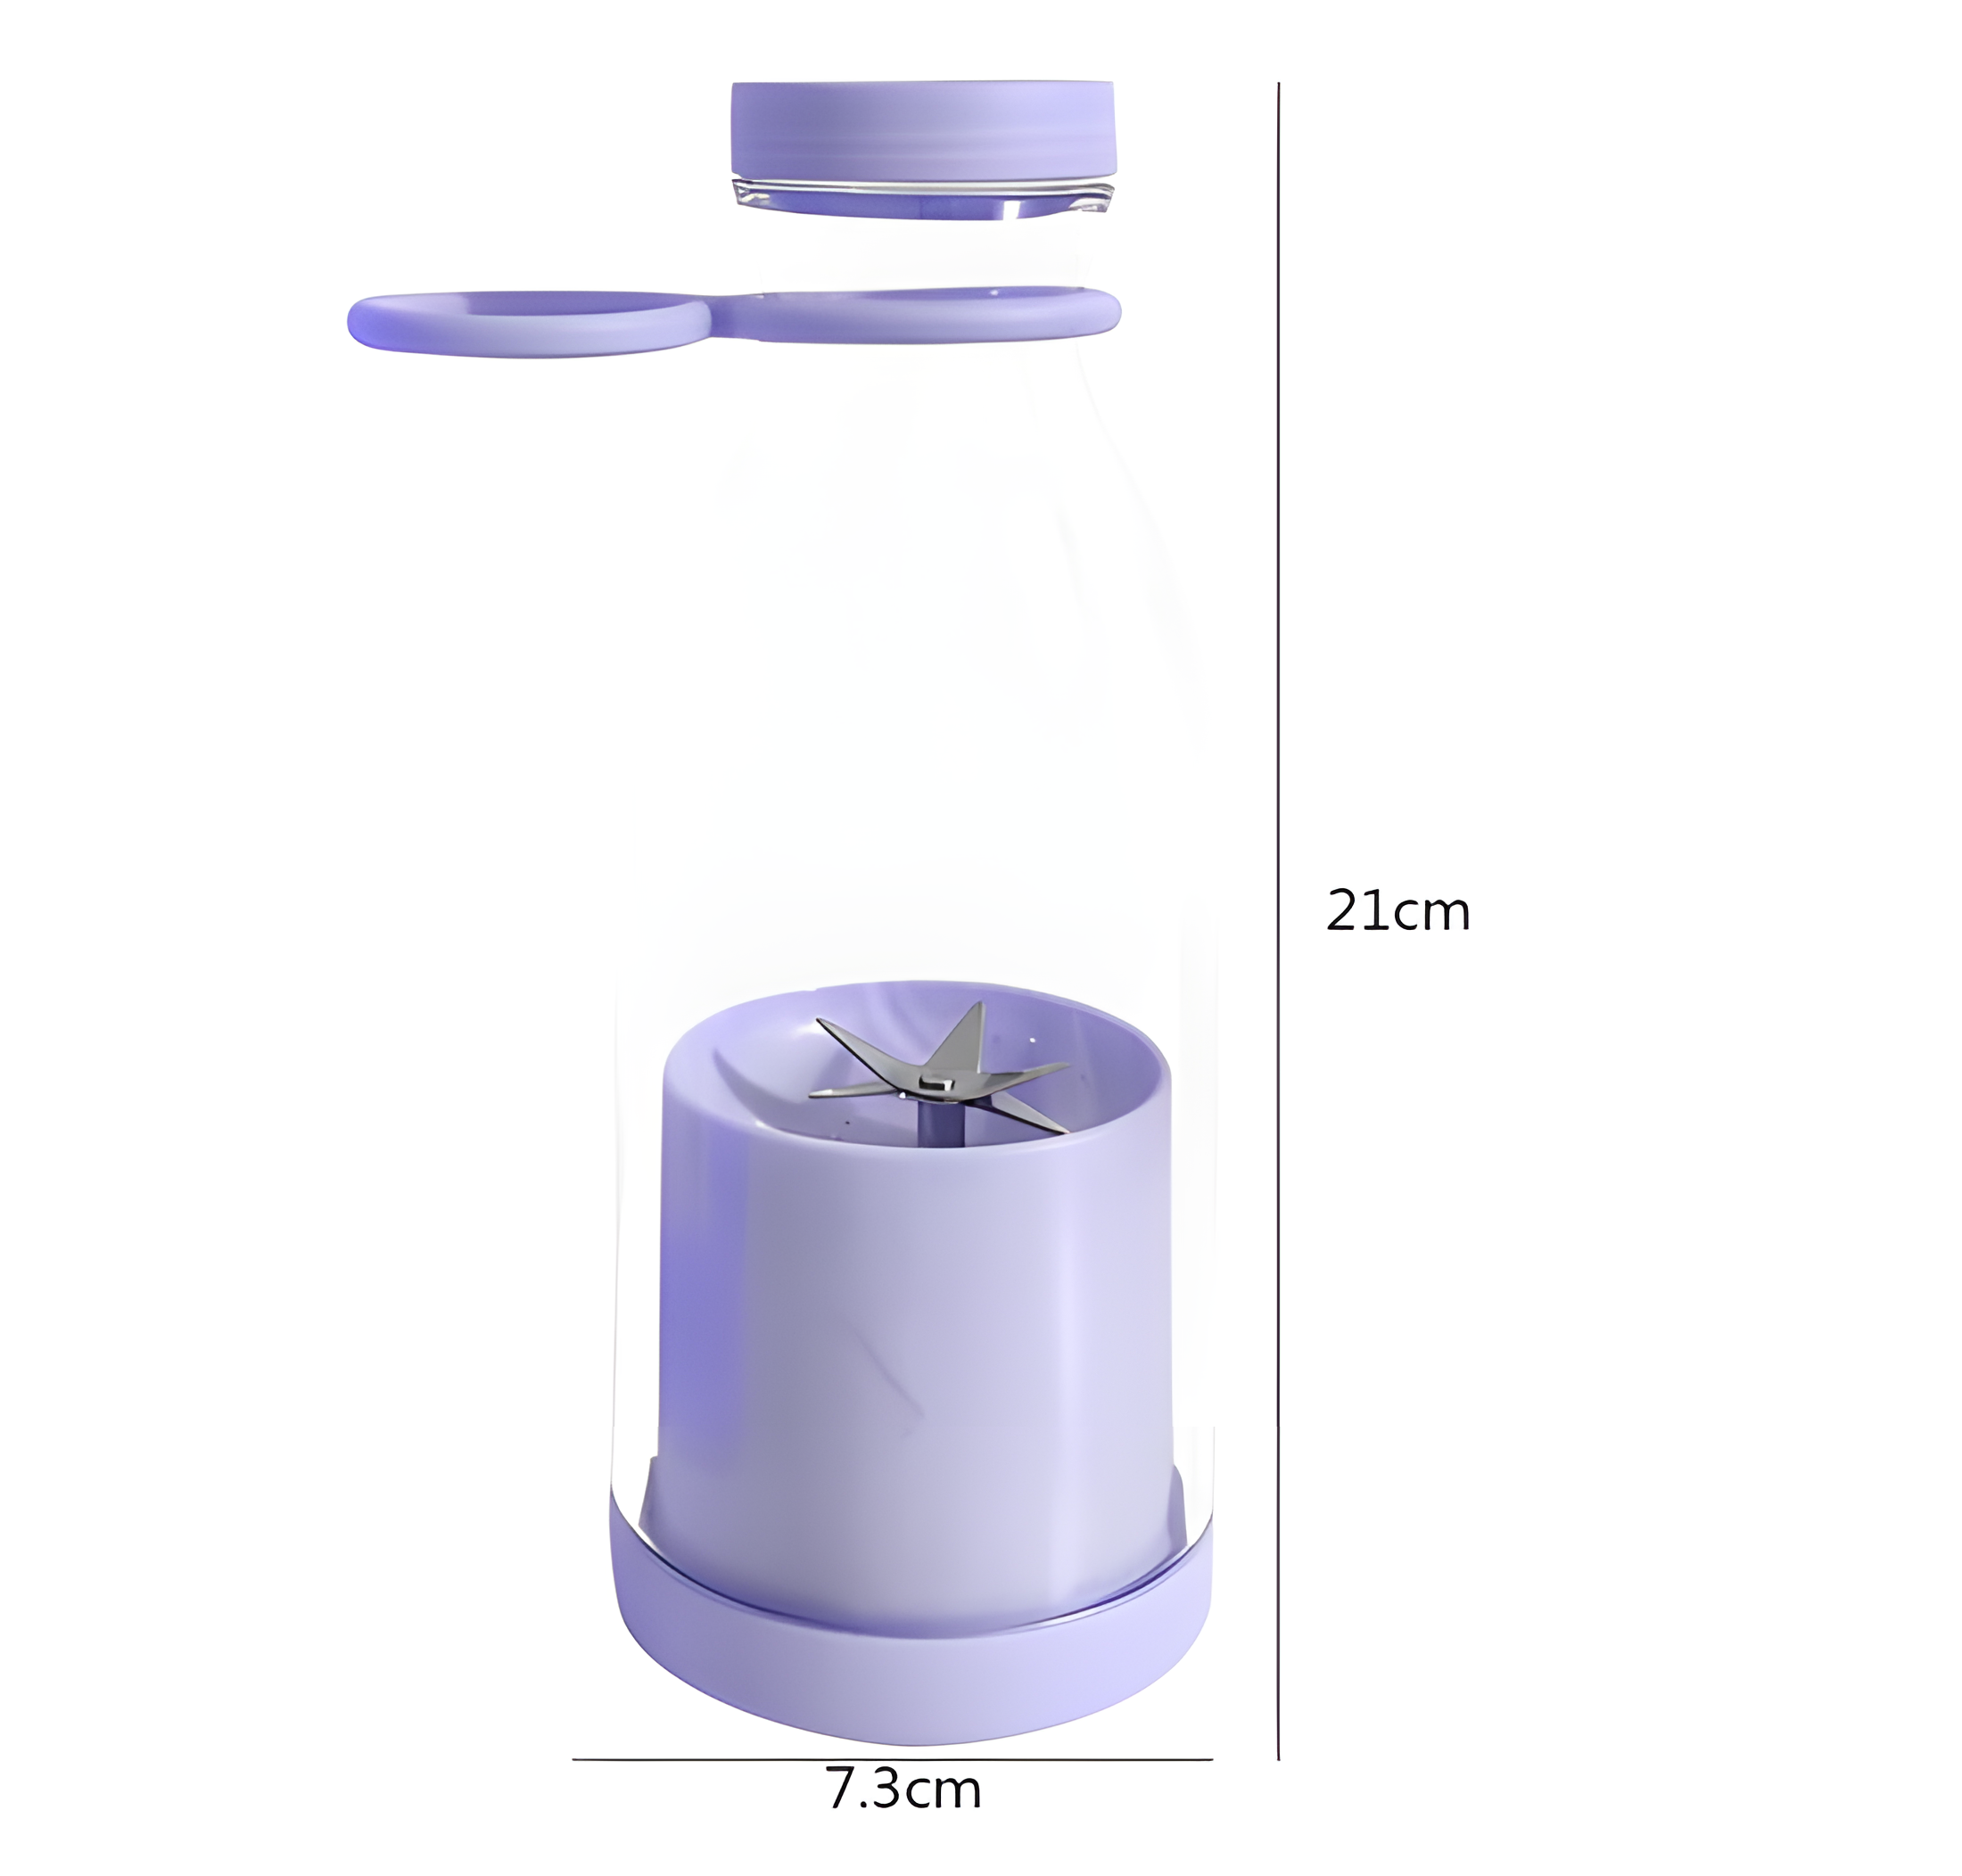 Mini Portable and Rechargeable Juice Maker, Blender Mixer USB Rechargeable Mini Fruit Juicer Blender - Purple image